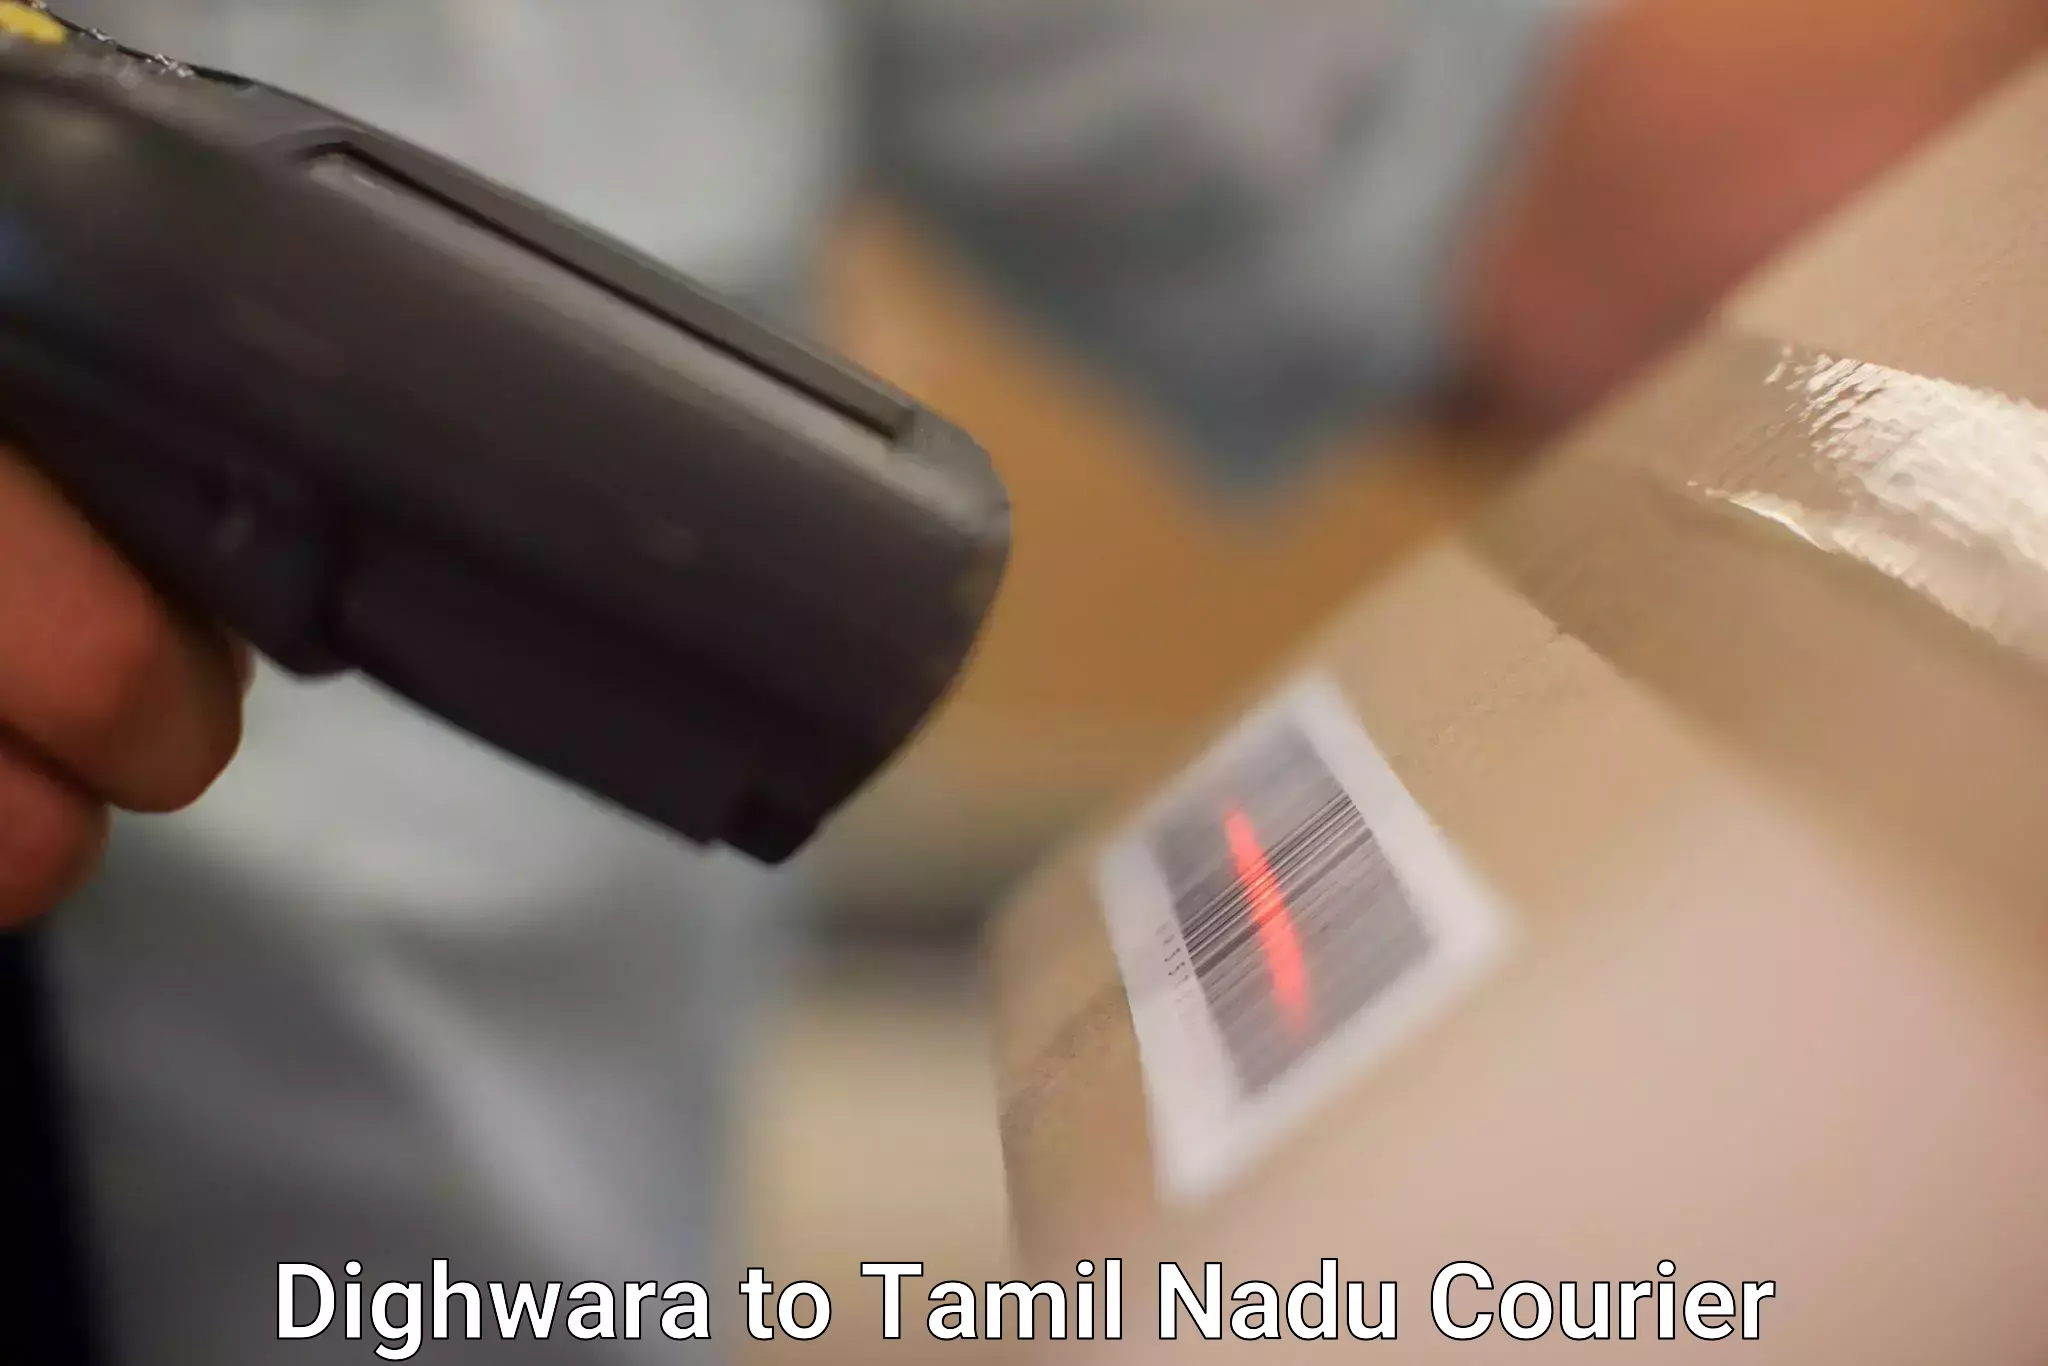 On-demand courier Dighwara to Ennore Port Chennai